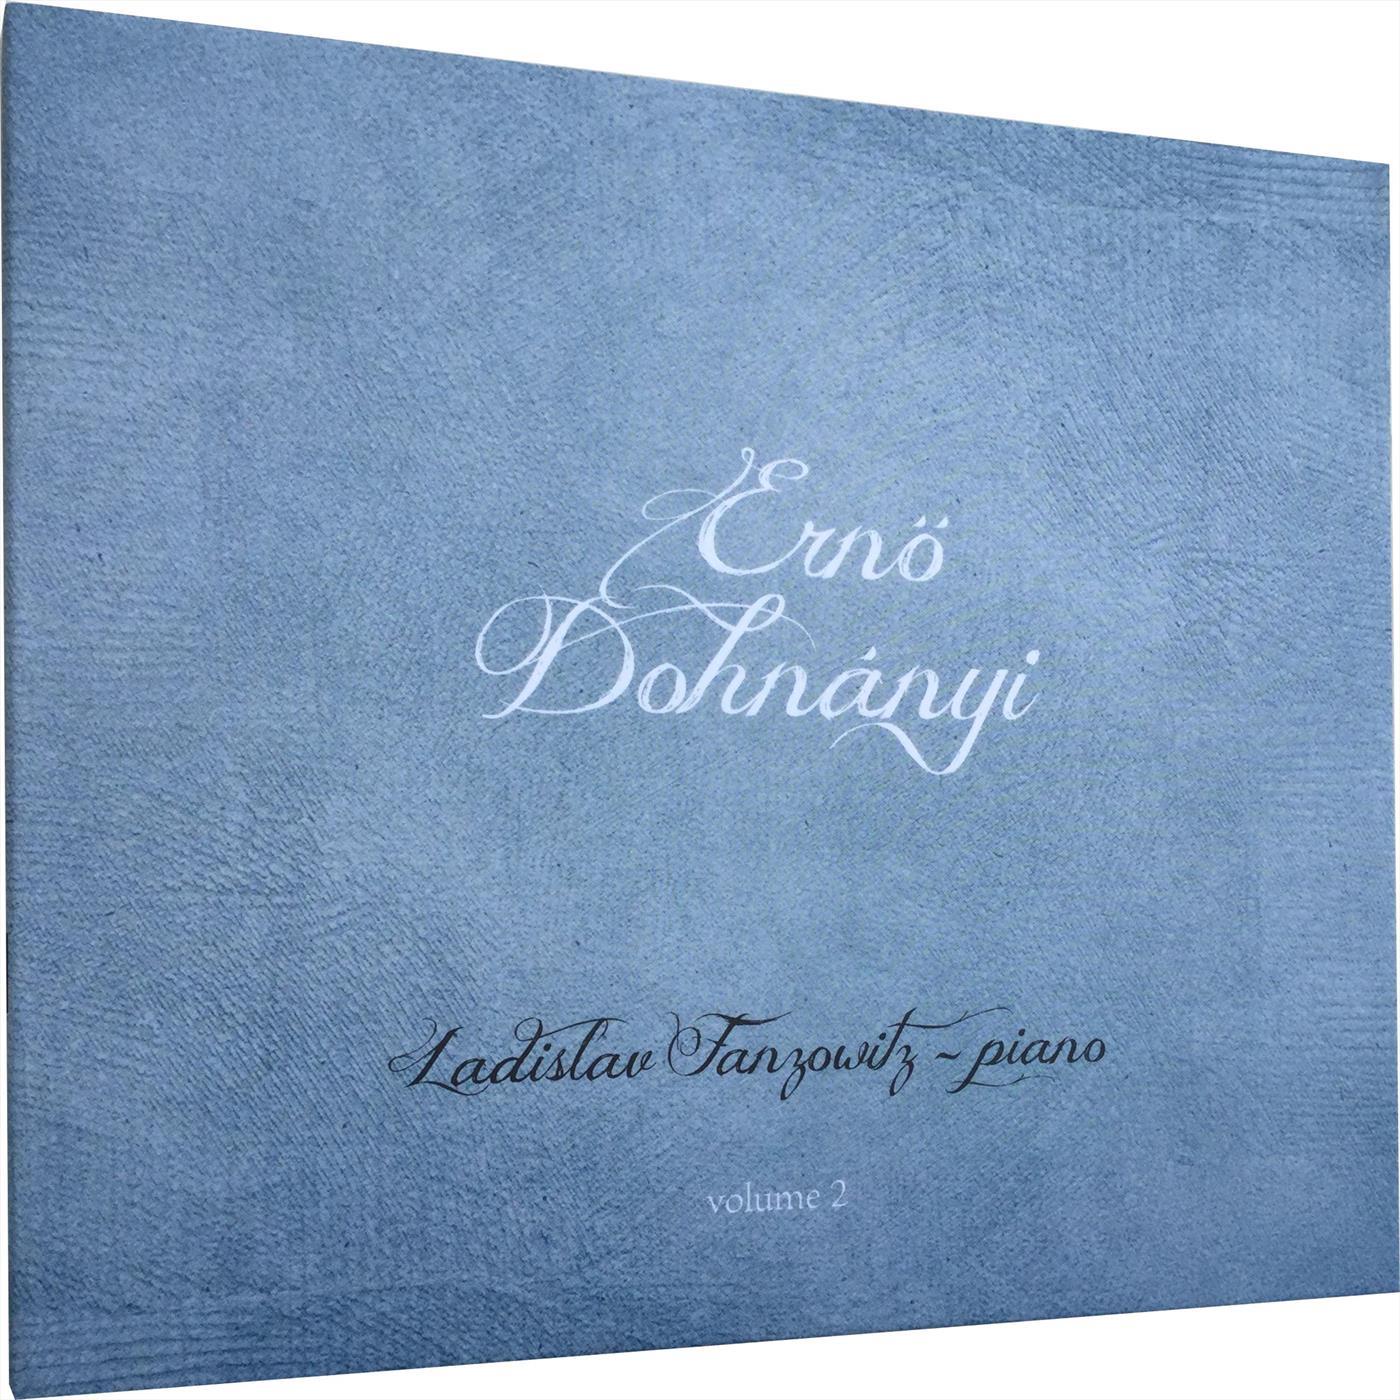 Ern Dohna nyi volume 2  Ladislav Fanzowitz, piano